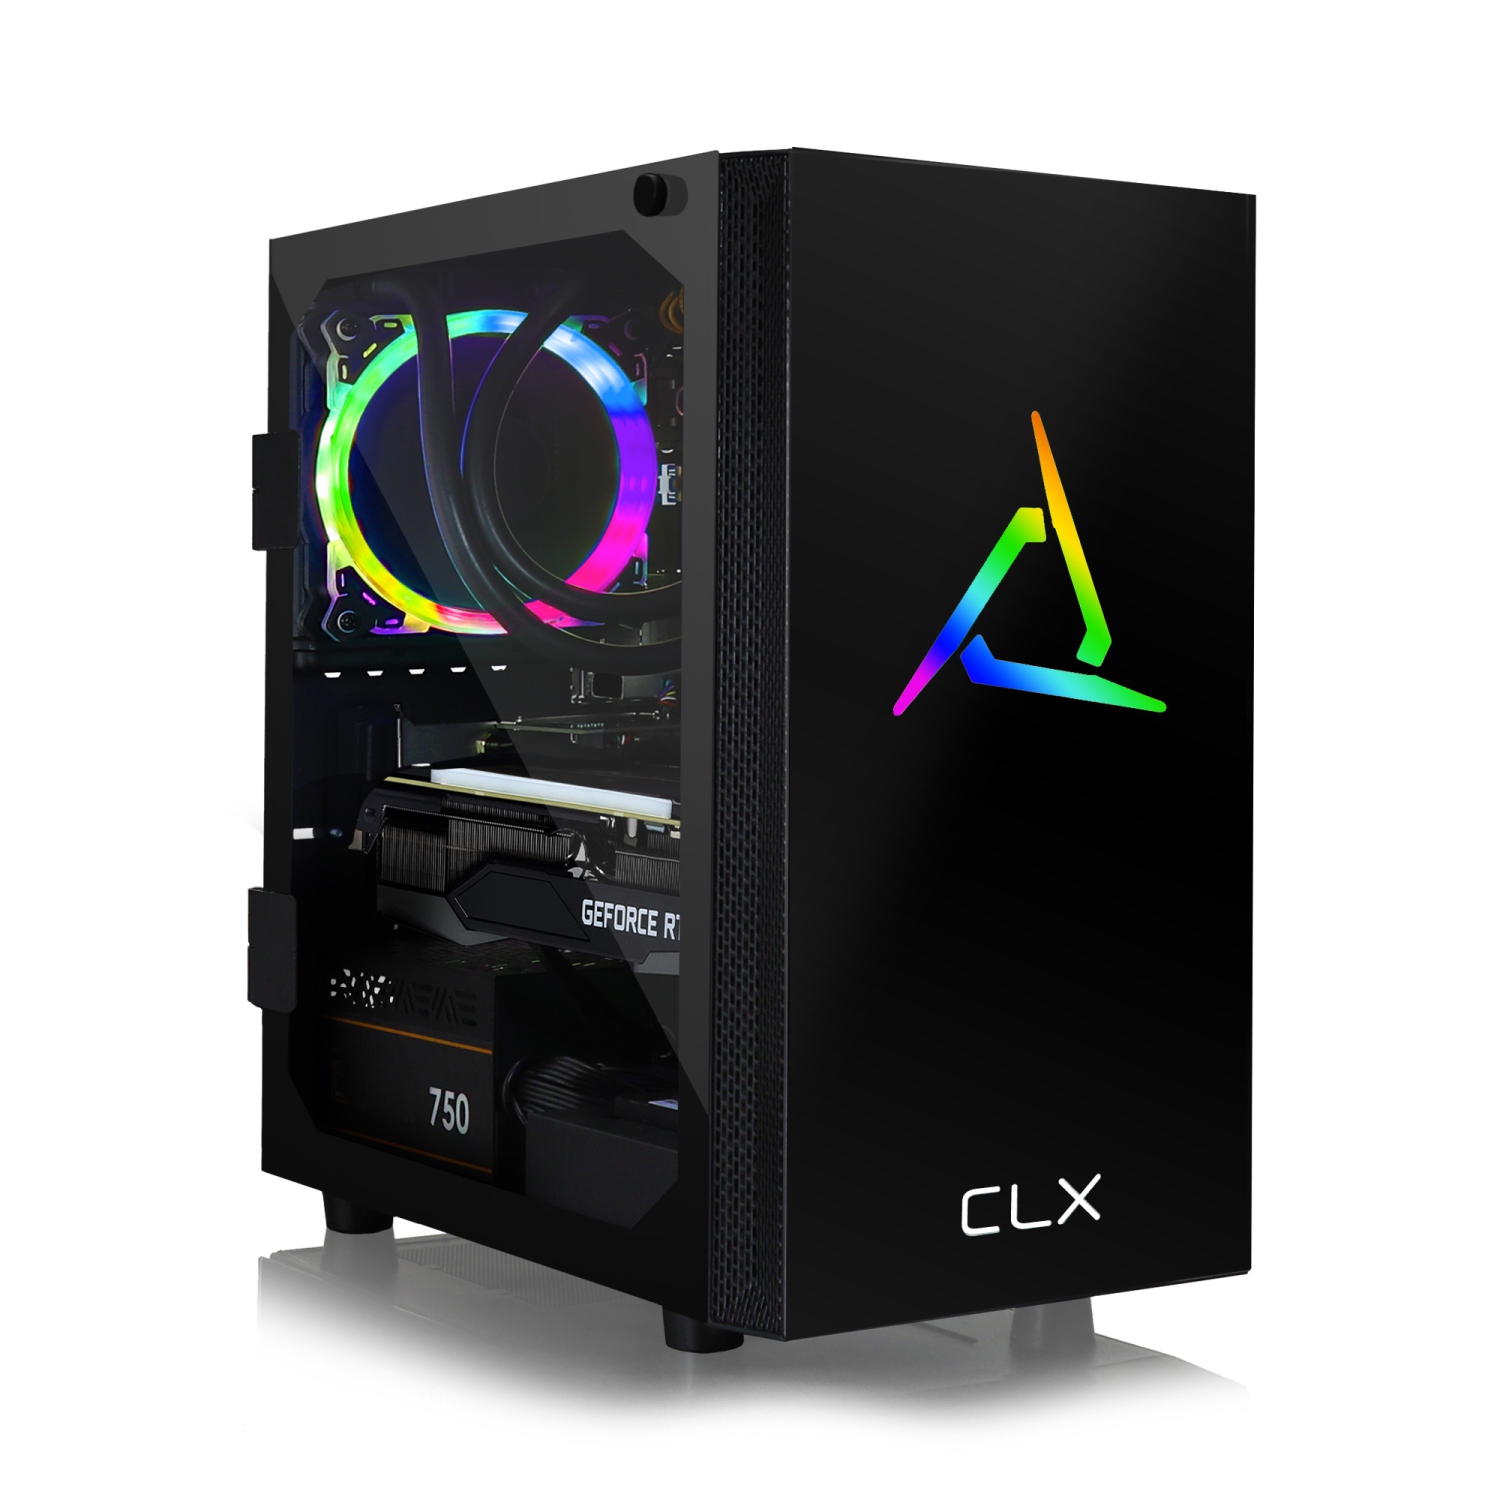 CLX SET Gaming Desktop - Liquid Cooled AMD Ryzen 9 5900X 3.7GHz 12-Core, 32GB DDR4 Memory, GeForce RTX 3070 8GB GDDR6 Graphics, 480GB SSD, 3TB HDD, WiFi, Windows 11 Home